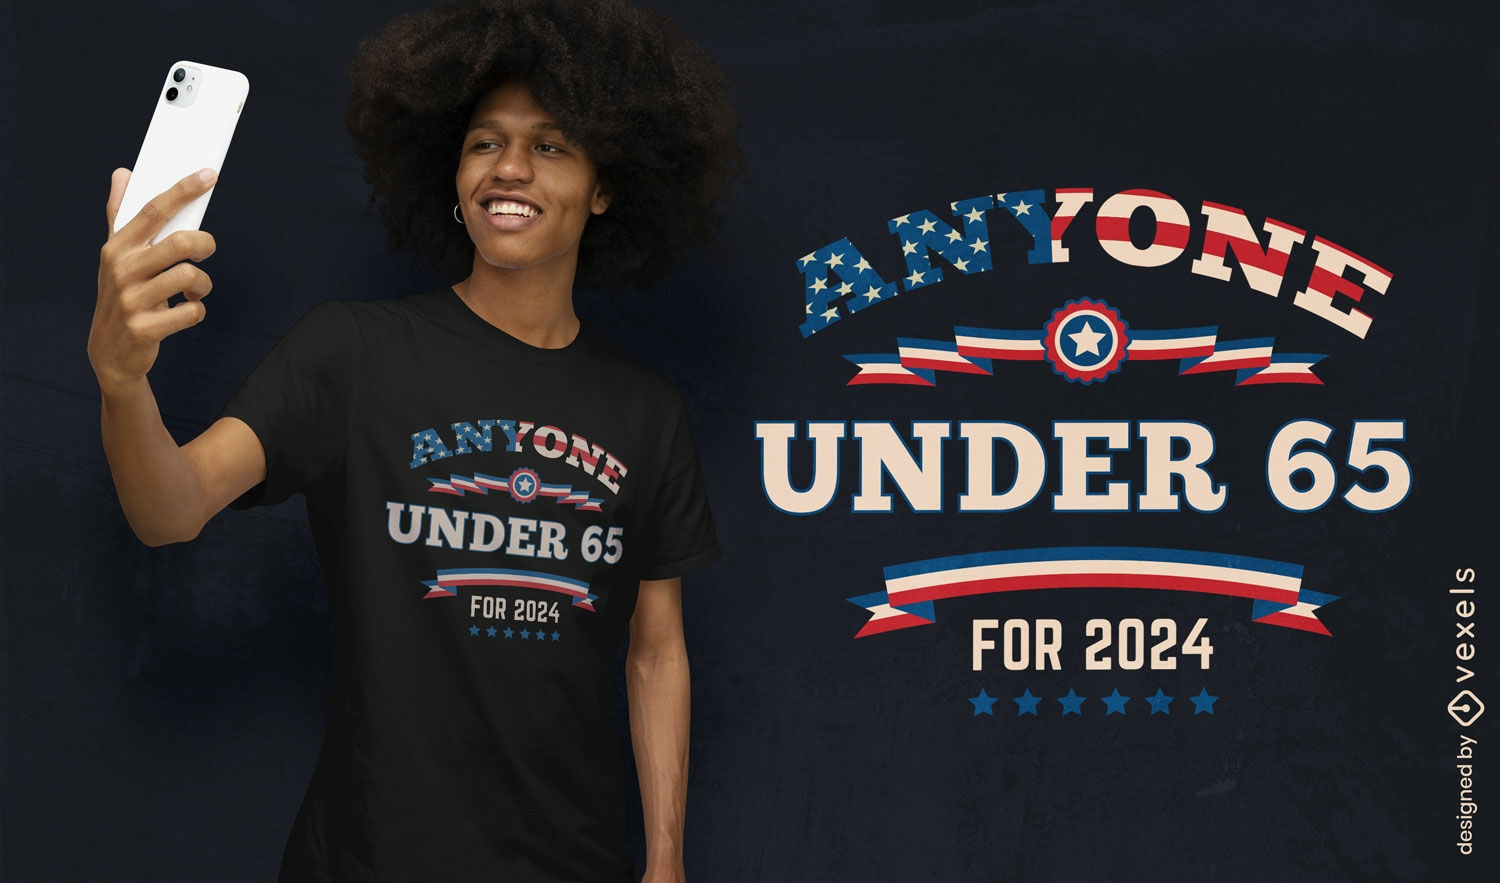 Elections campaign t-shirt design